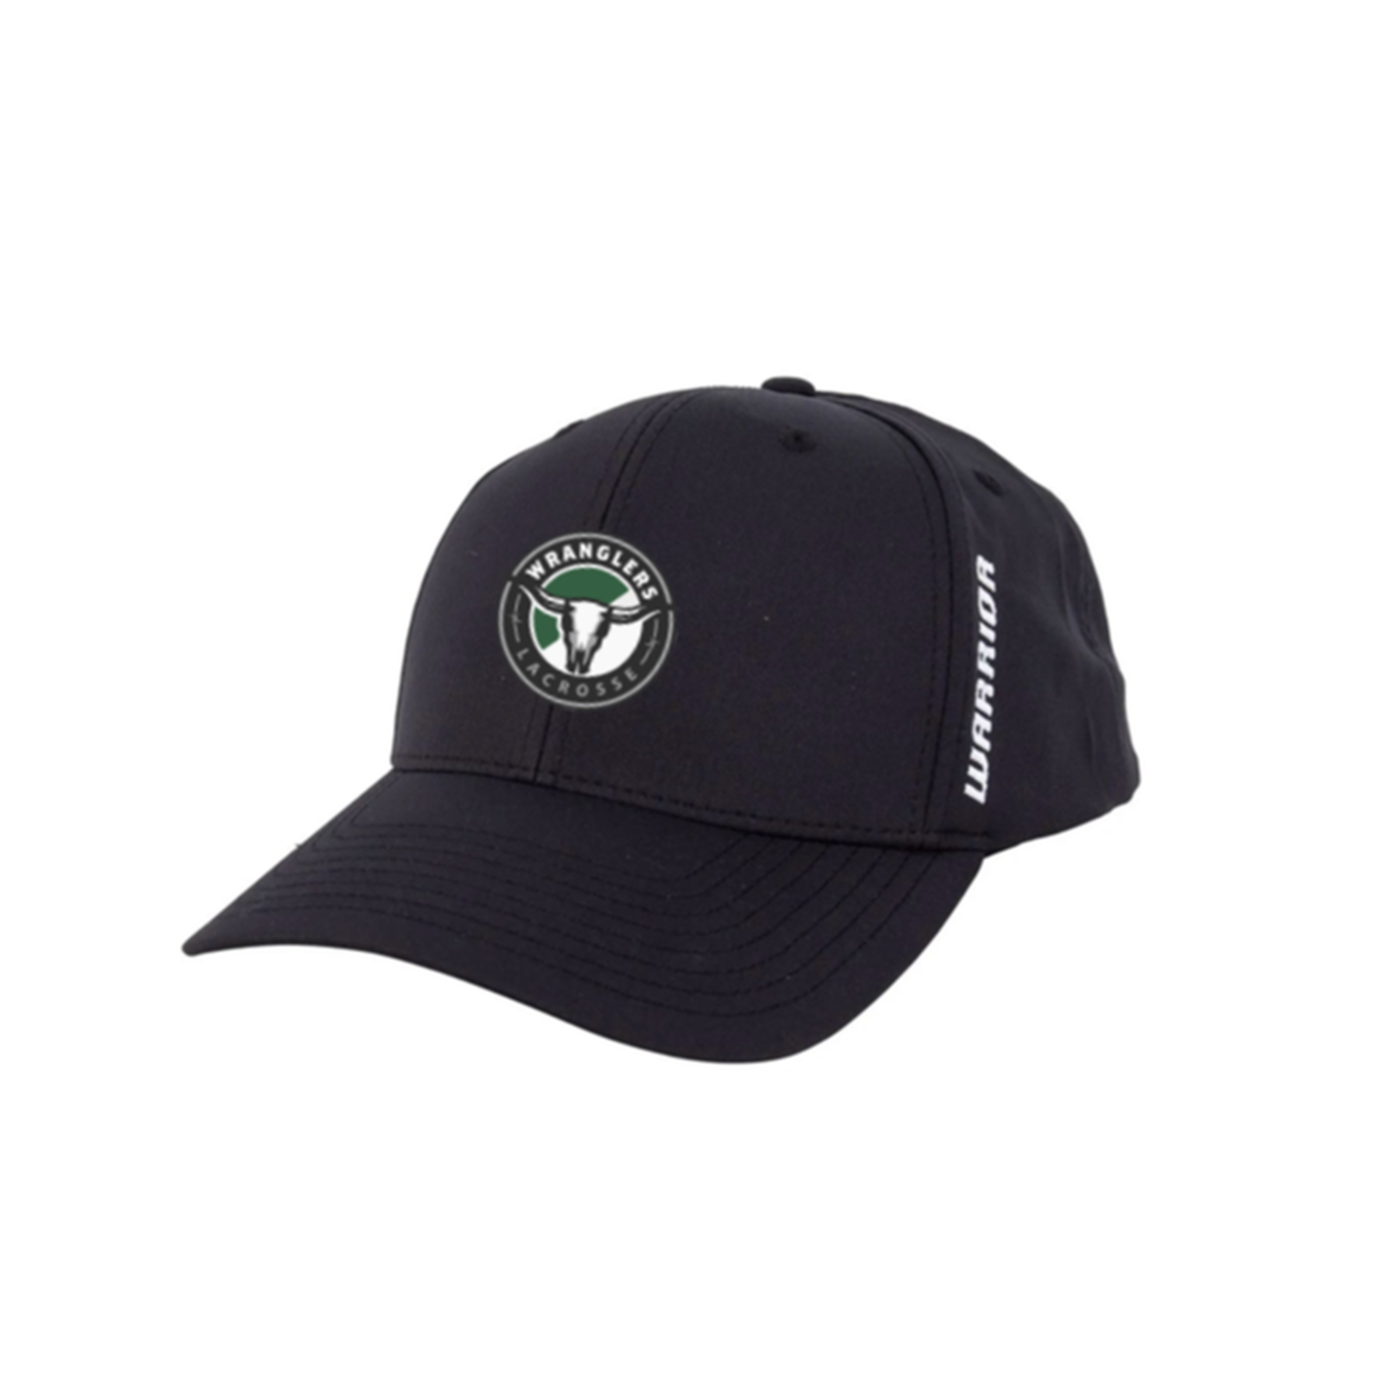 Wrangler Team Performance Snapback Hat